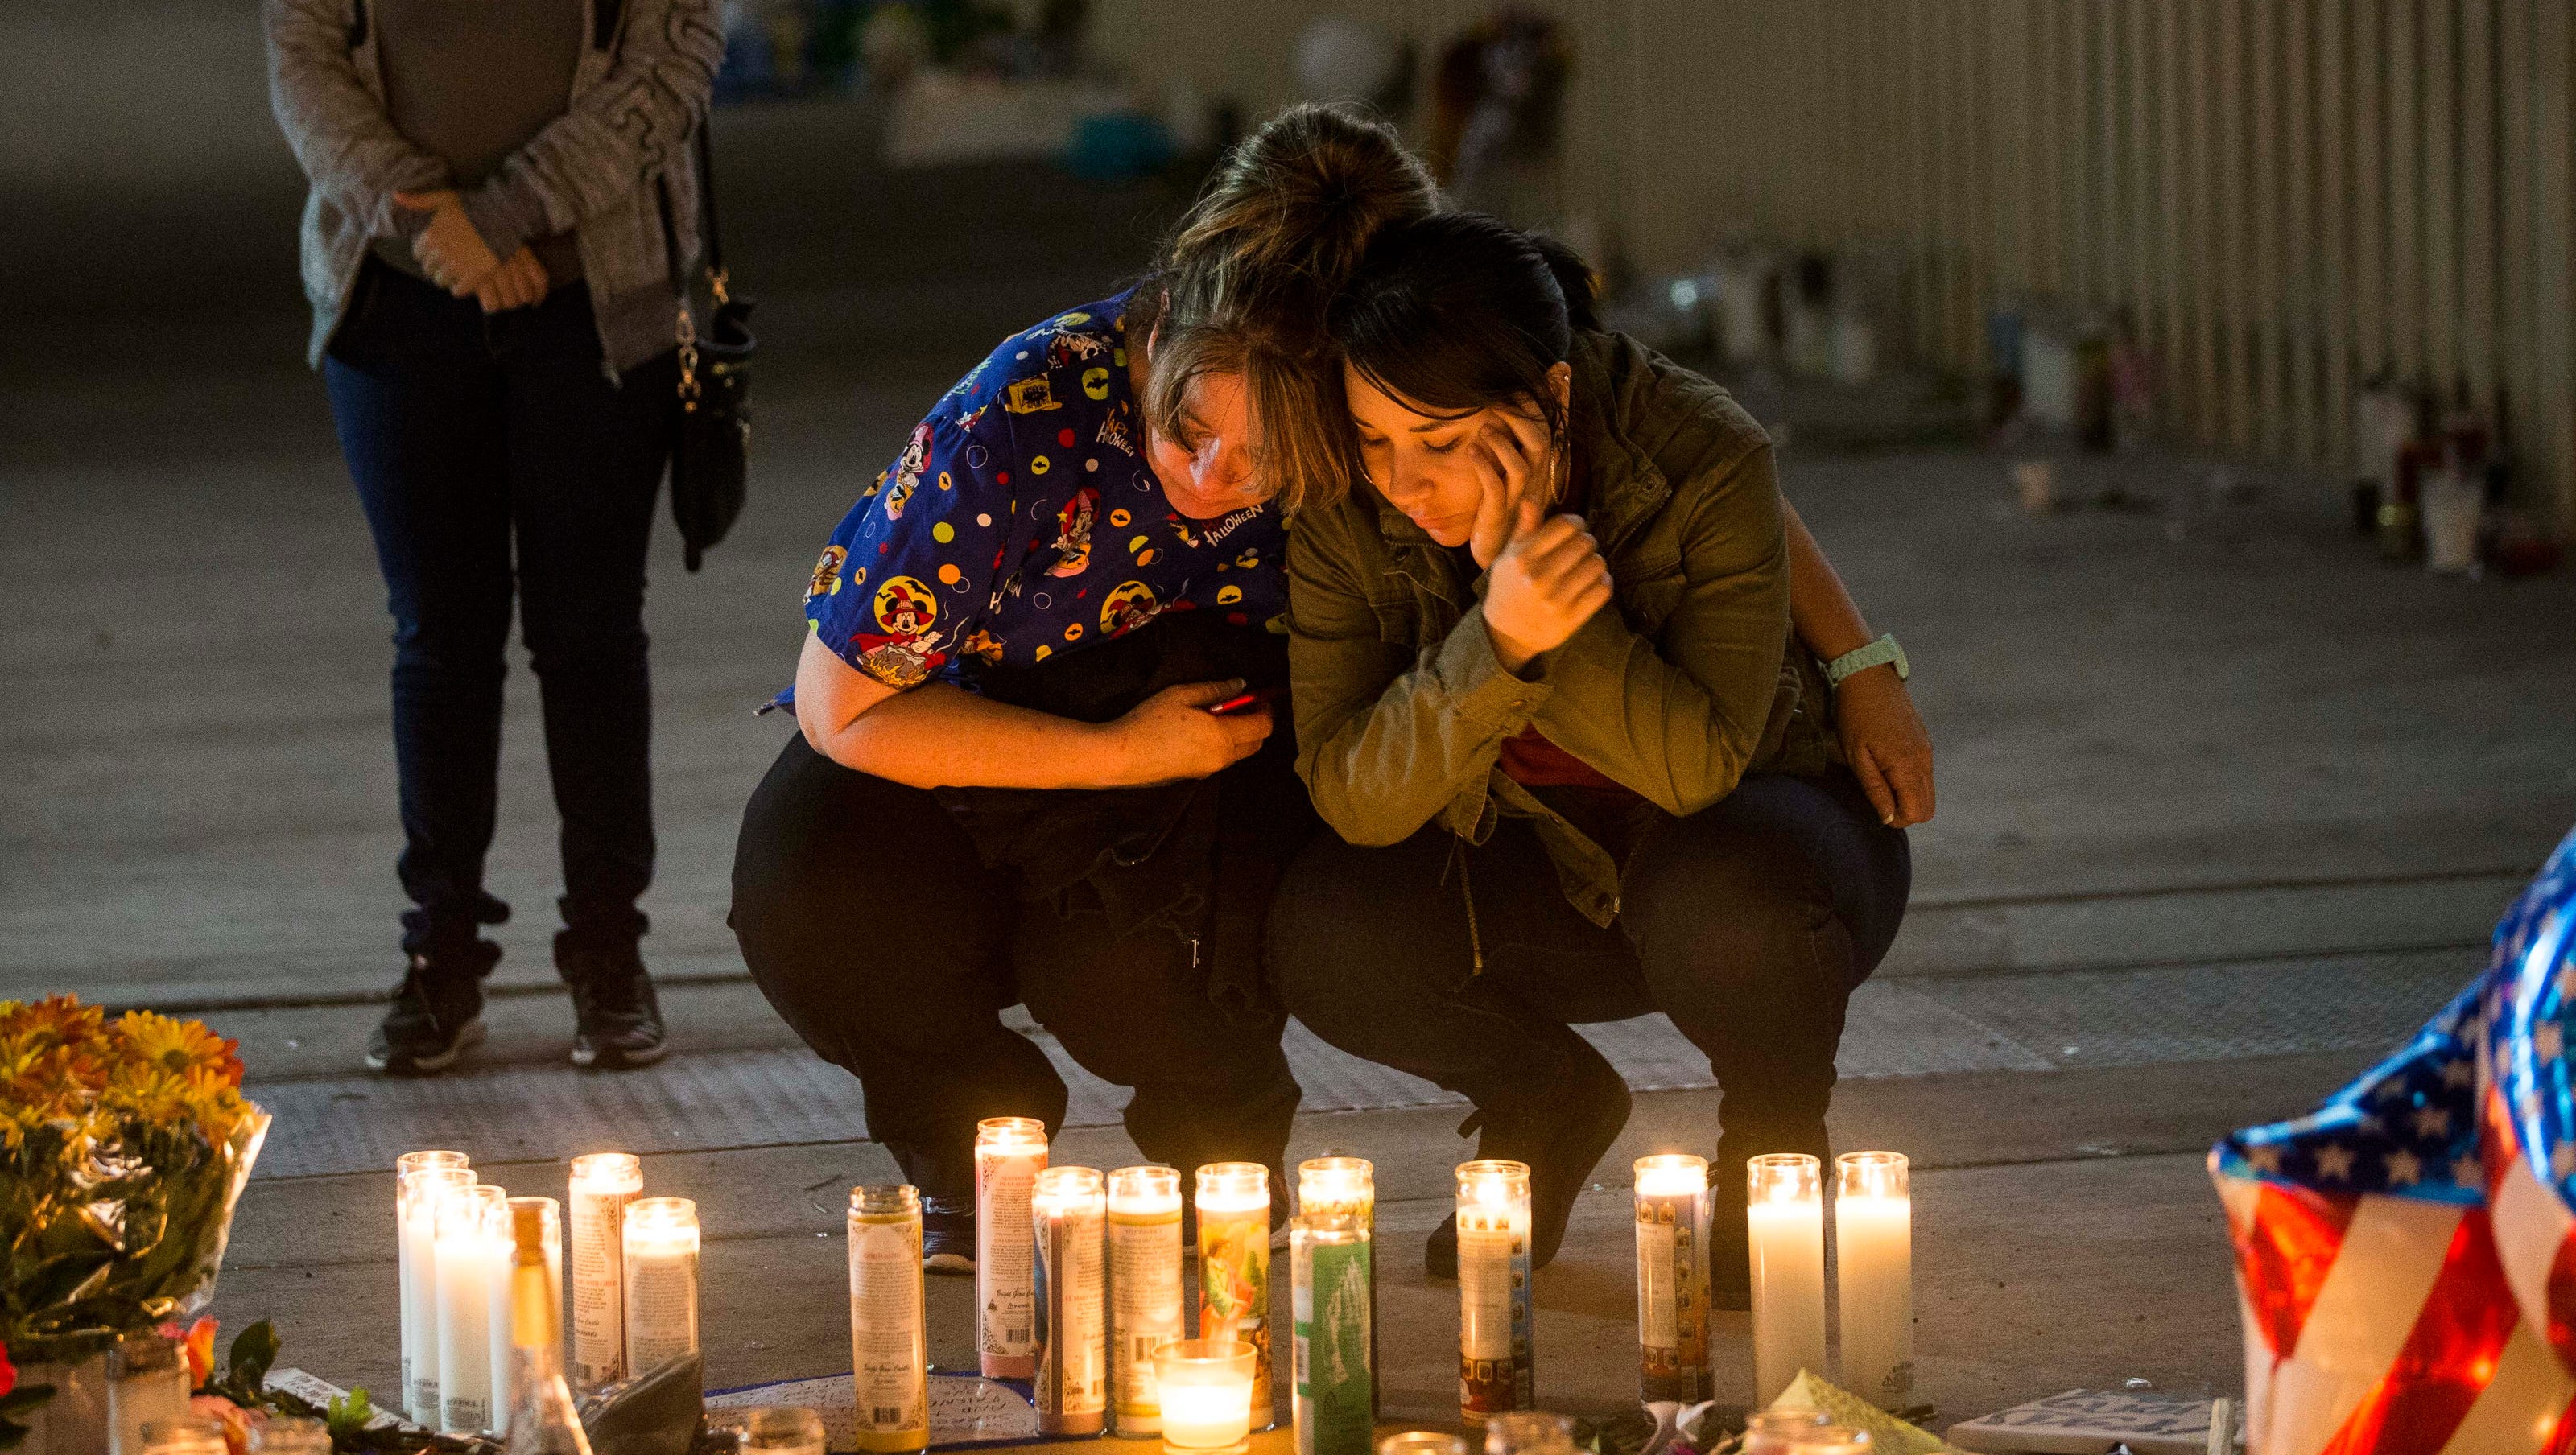 Las Vegas shooting: Why did ISIS claim responsibility?